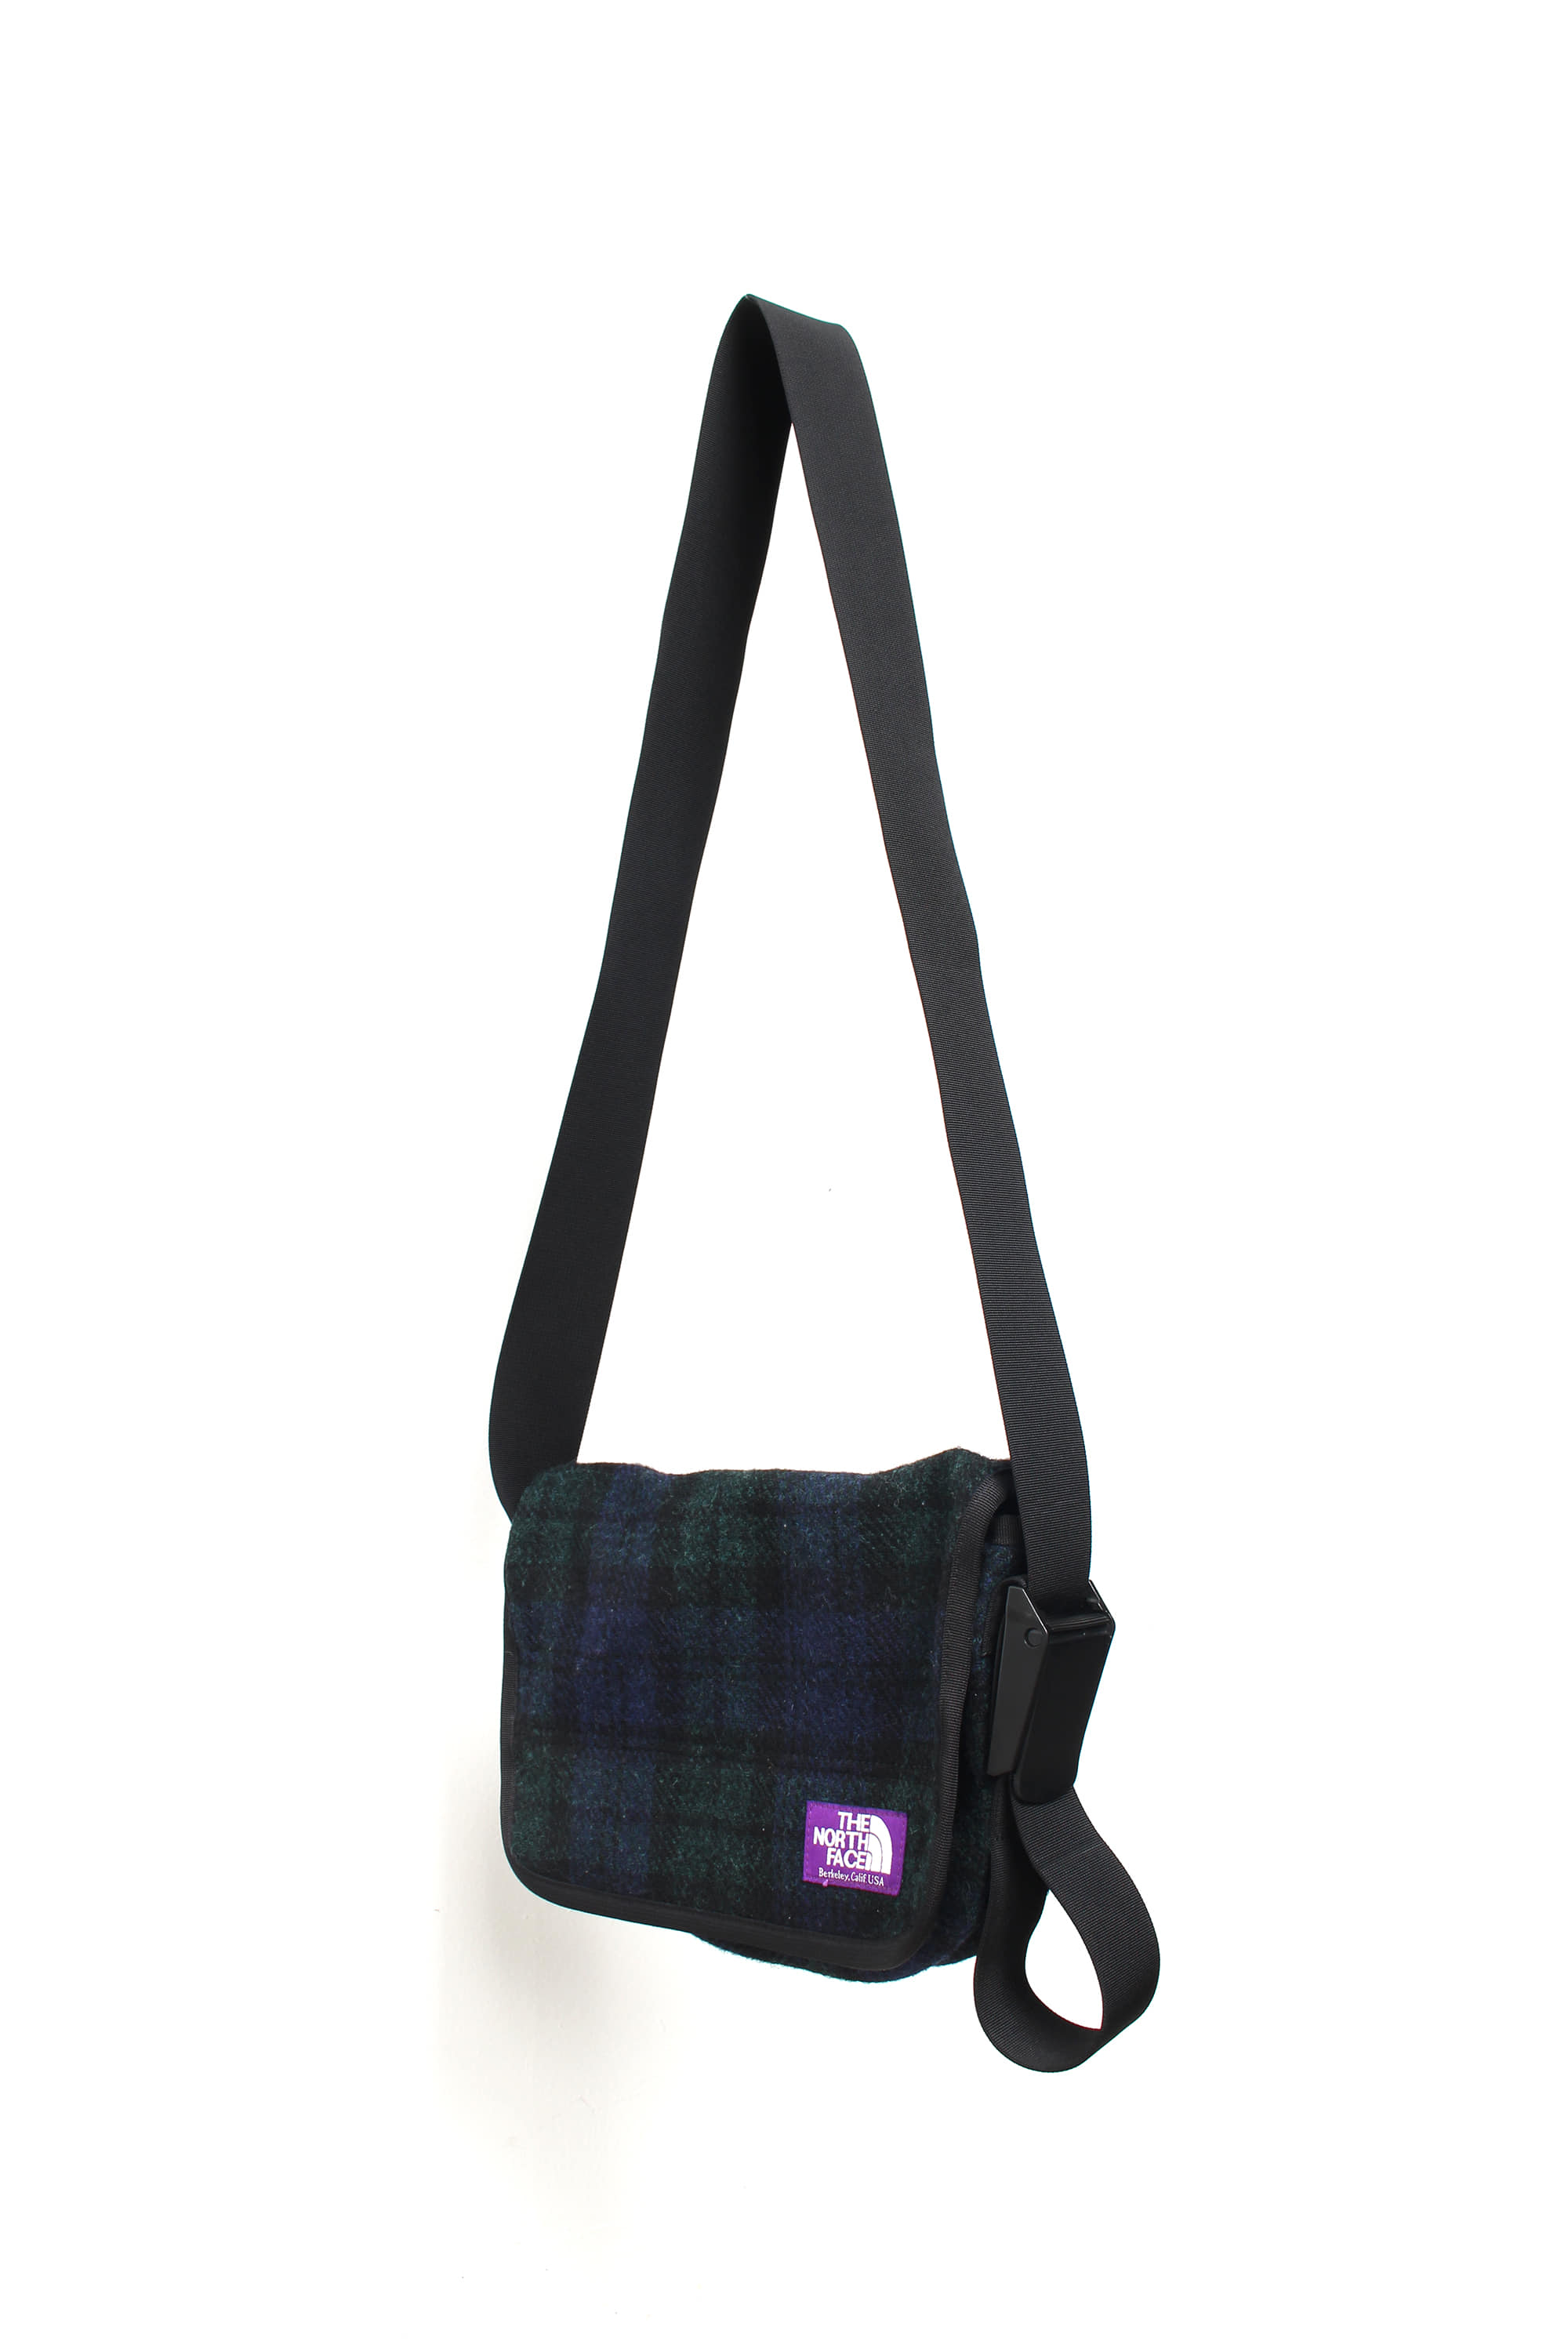 THE NORTH FACE Purple Label x Harris Tweed Bag